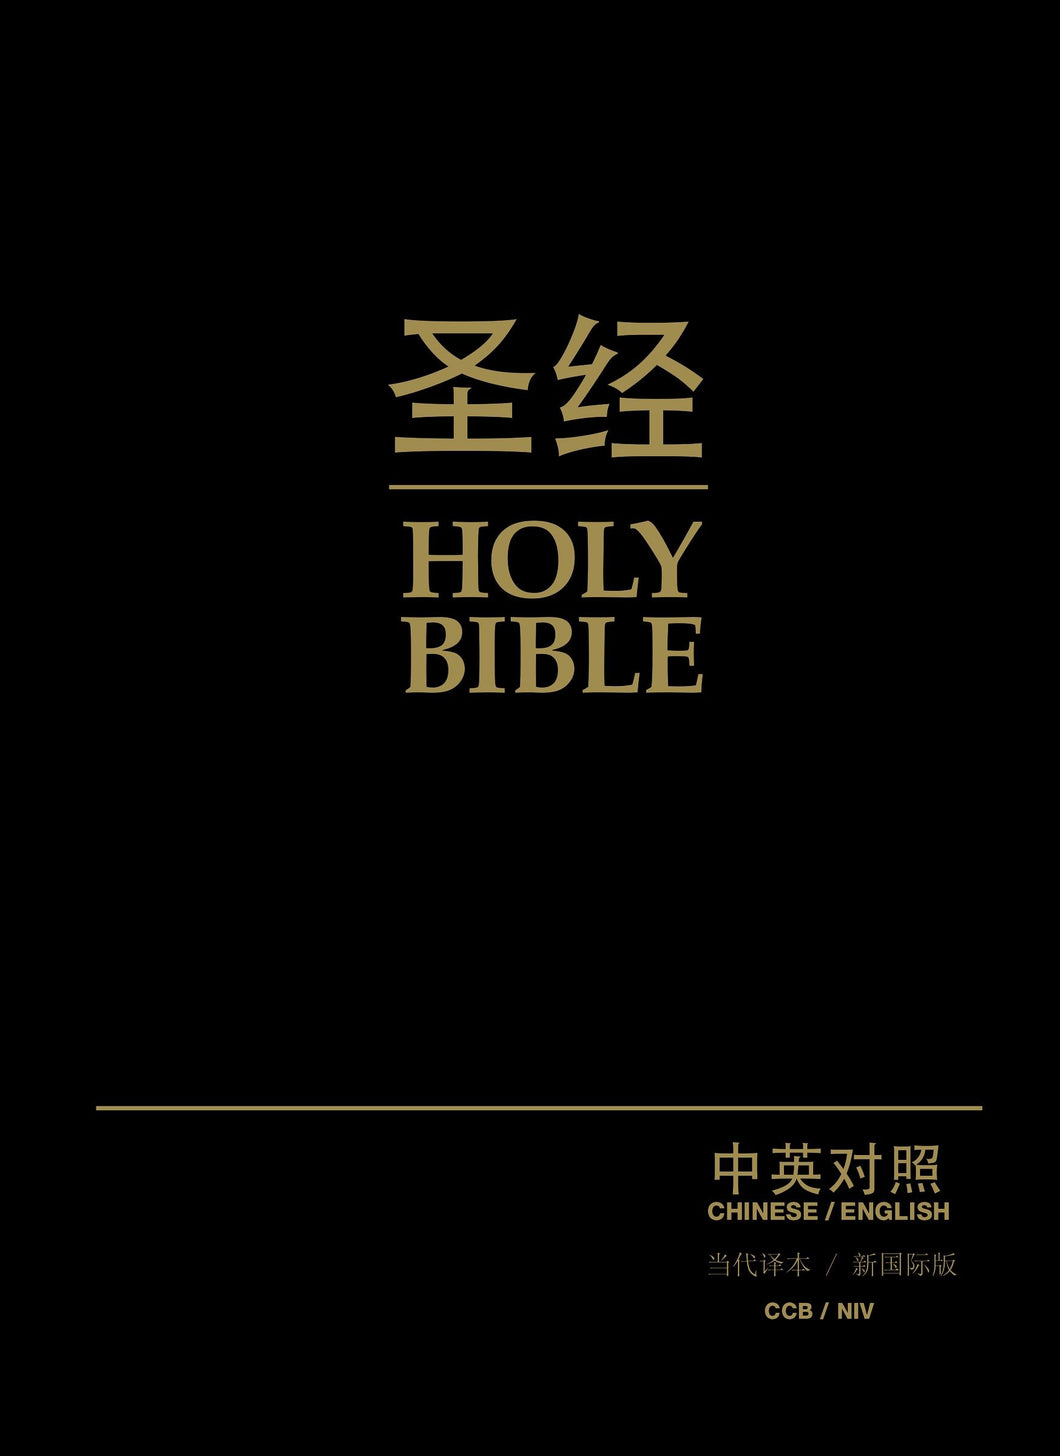 CCB/NIV Chinese & English Bilingual Bible-Hardcover